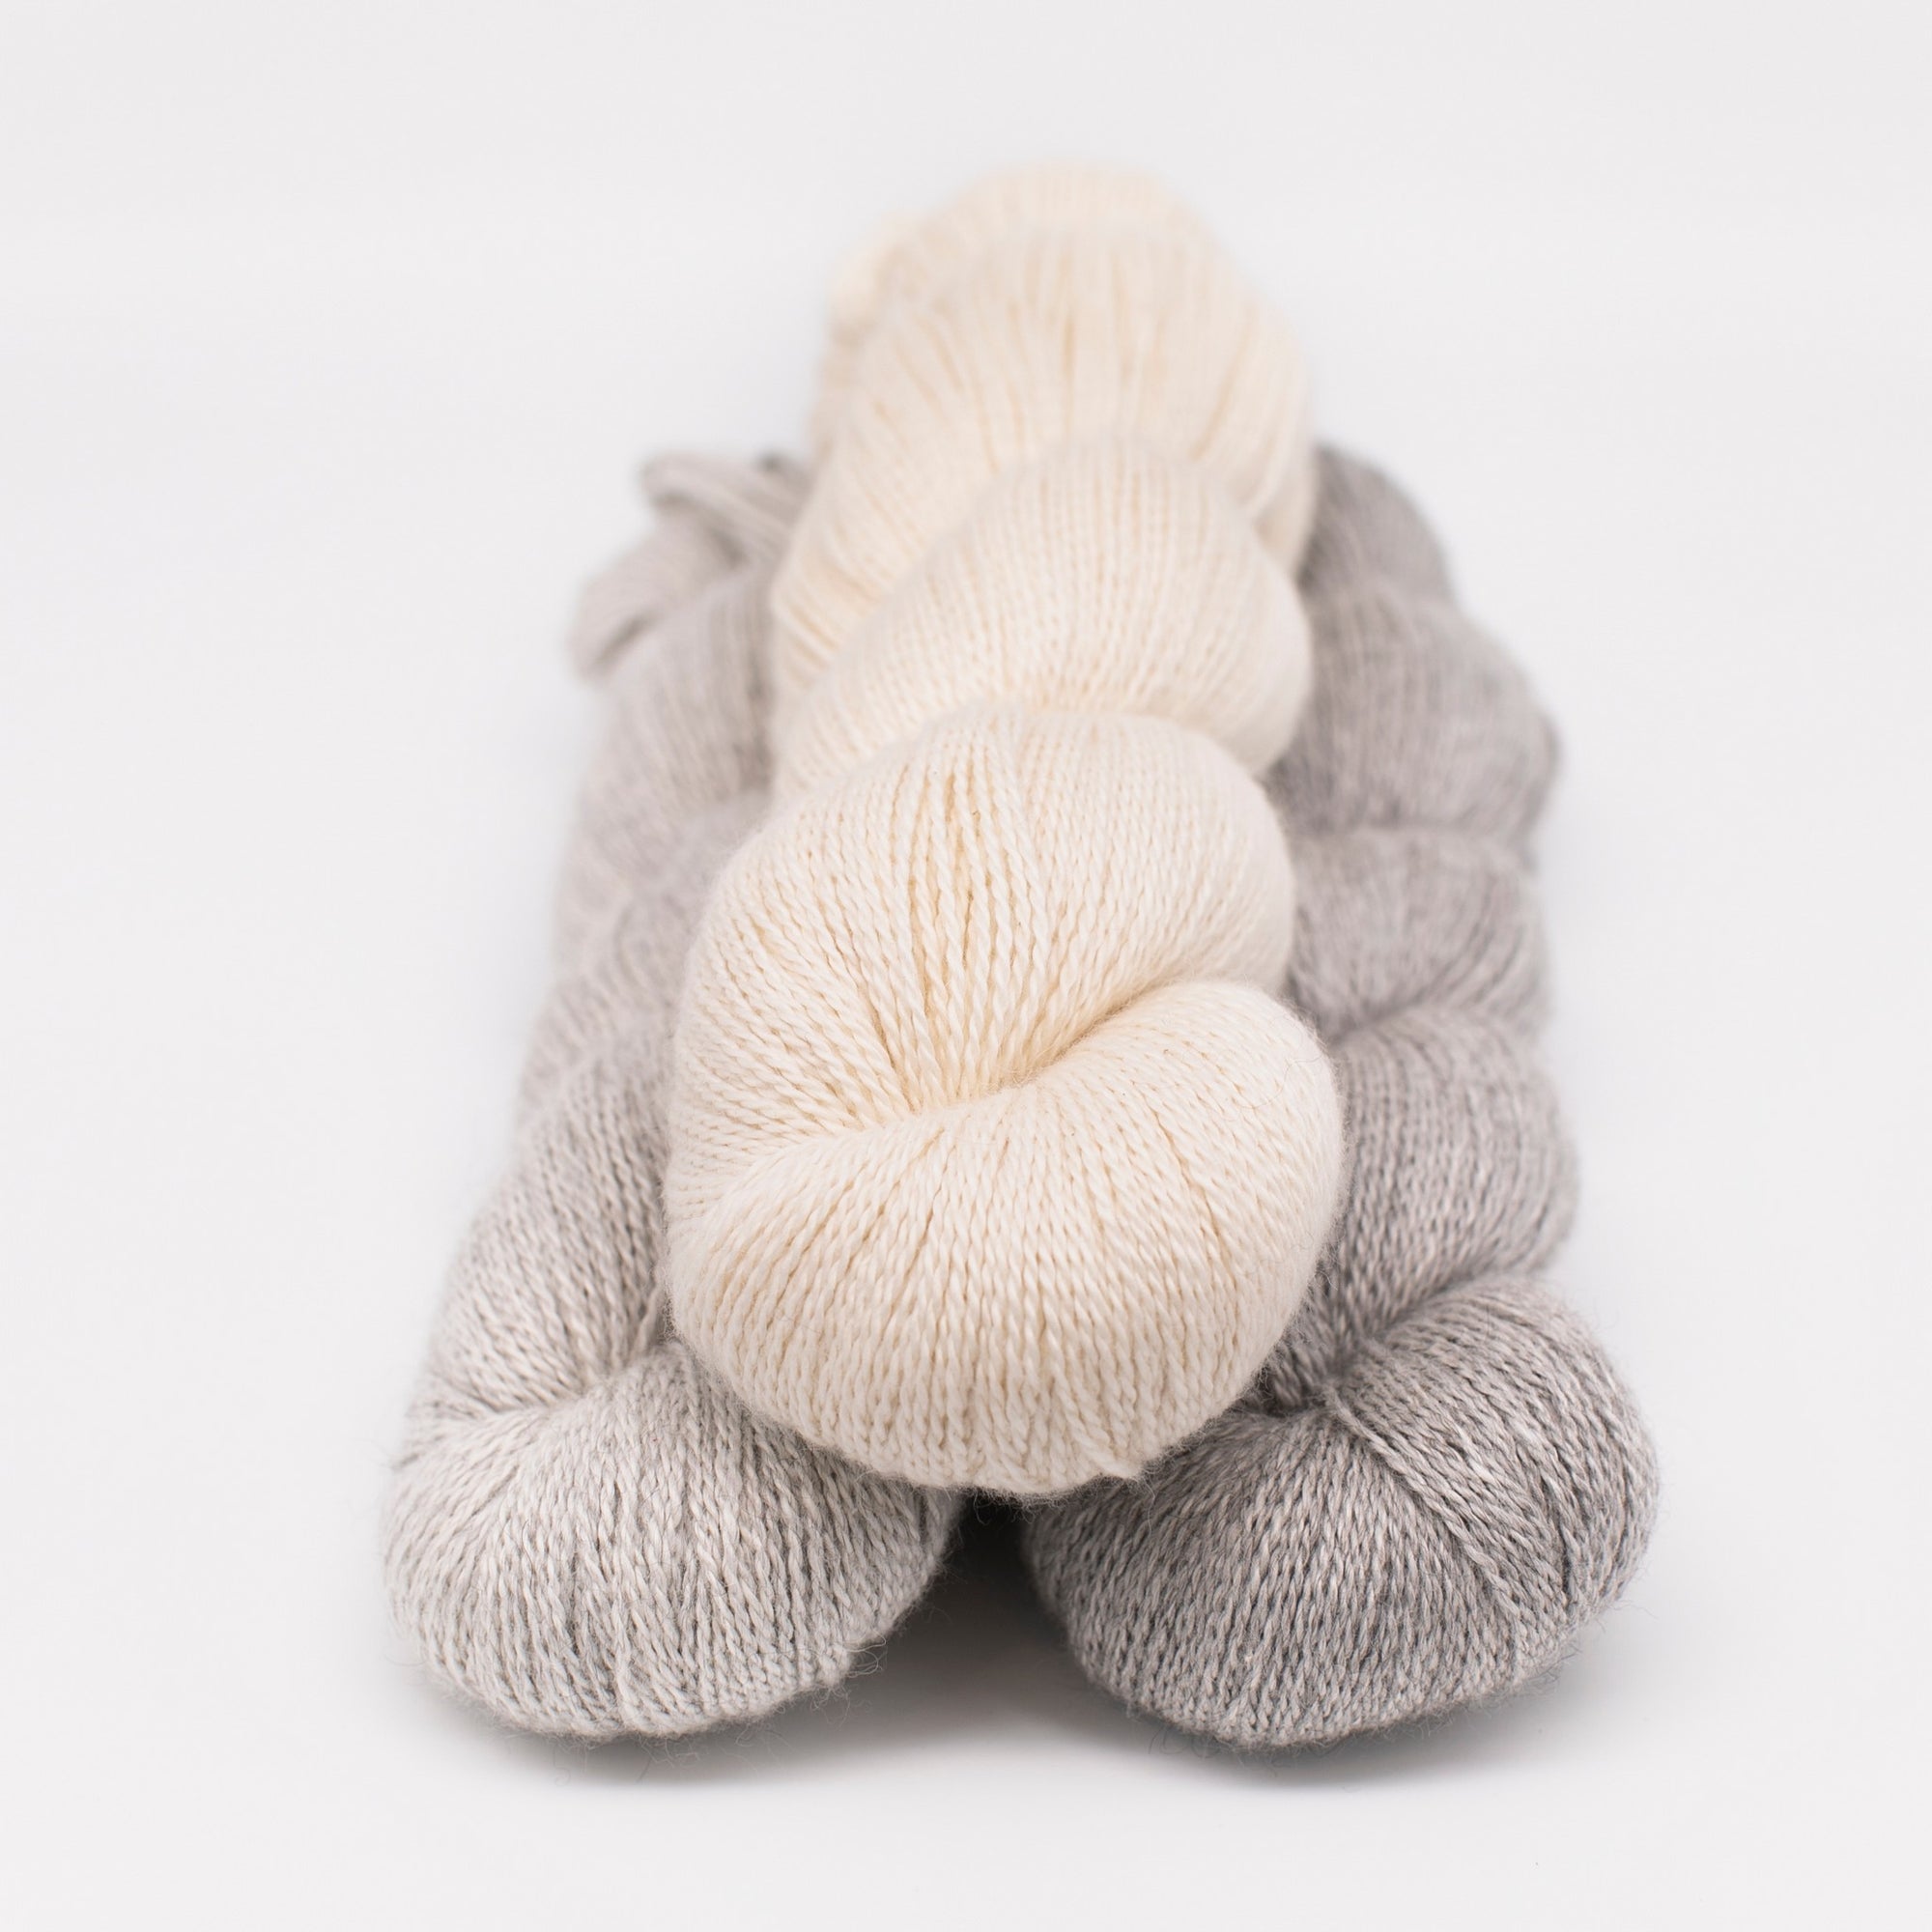 Bristlegrass Victorian Rose Yarn Baby Yarn for Crocheting Soft Cotton,  Soft, Crochet and Knitting 100% Acrylic Yarn,Cotton Yarn for  Dishcloths3X1.76